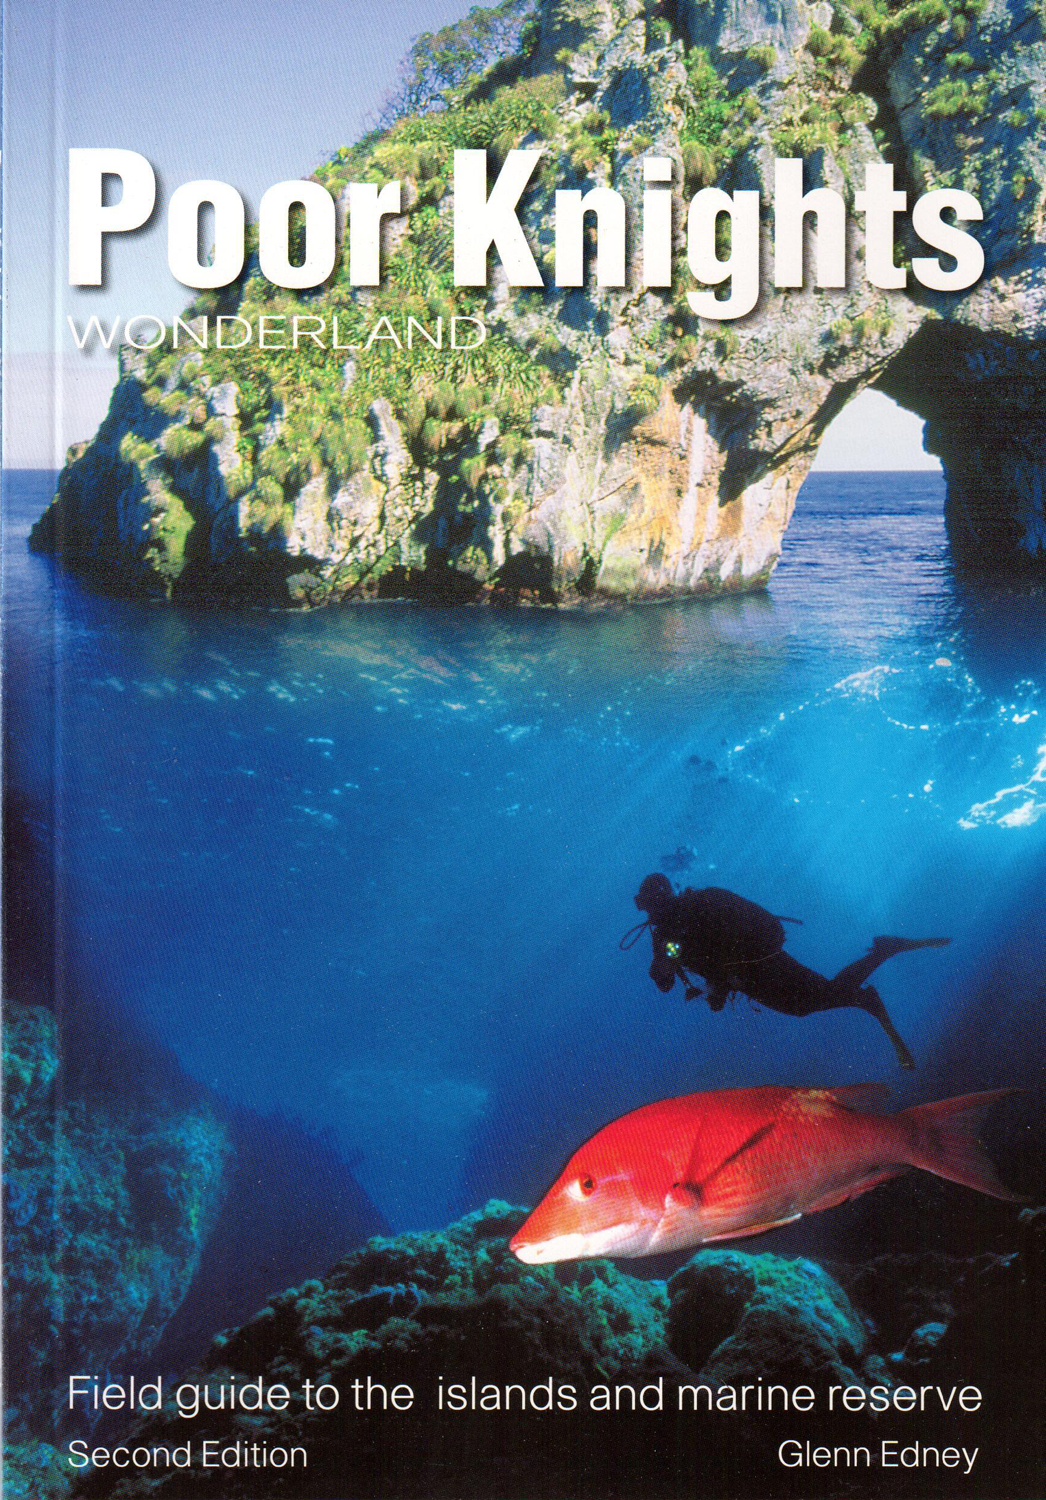 Poor Knights Wonderland by Glenn Edney - second edition